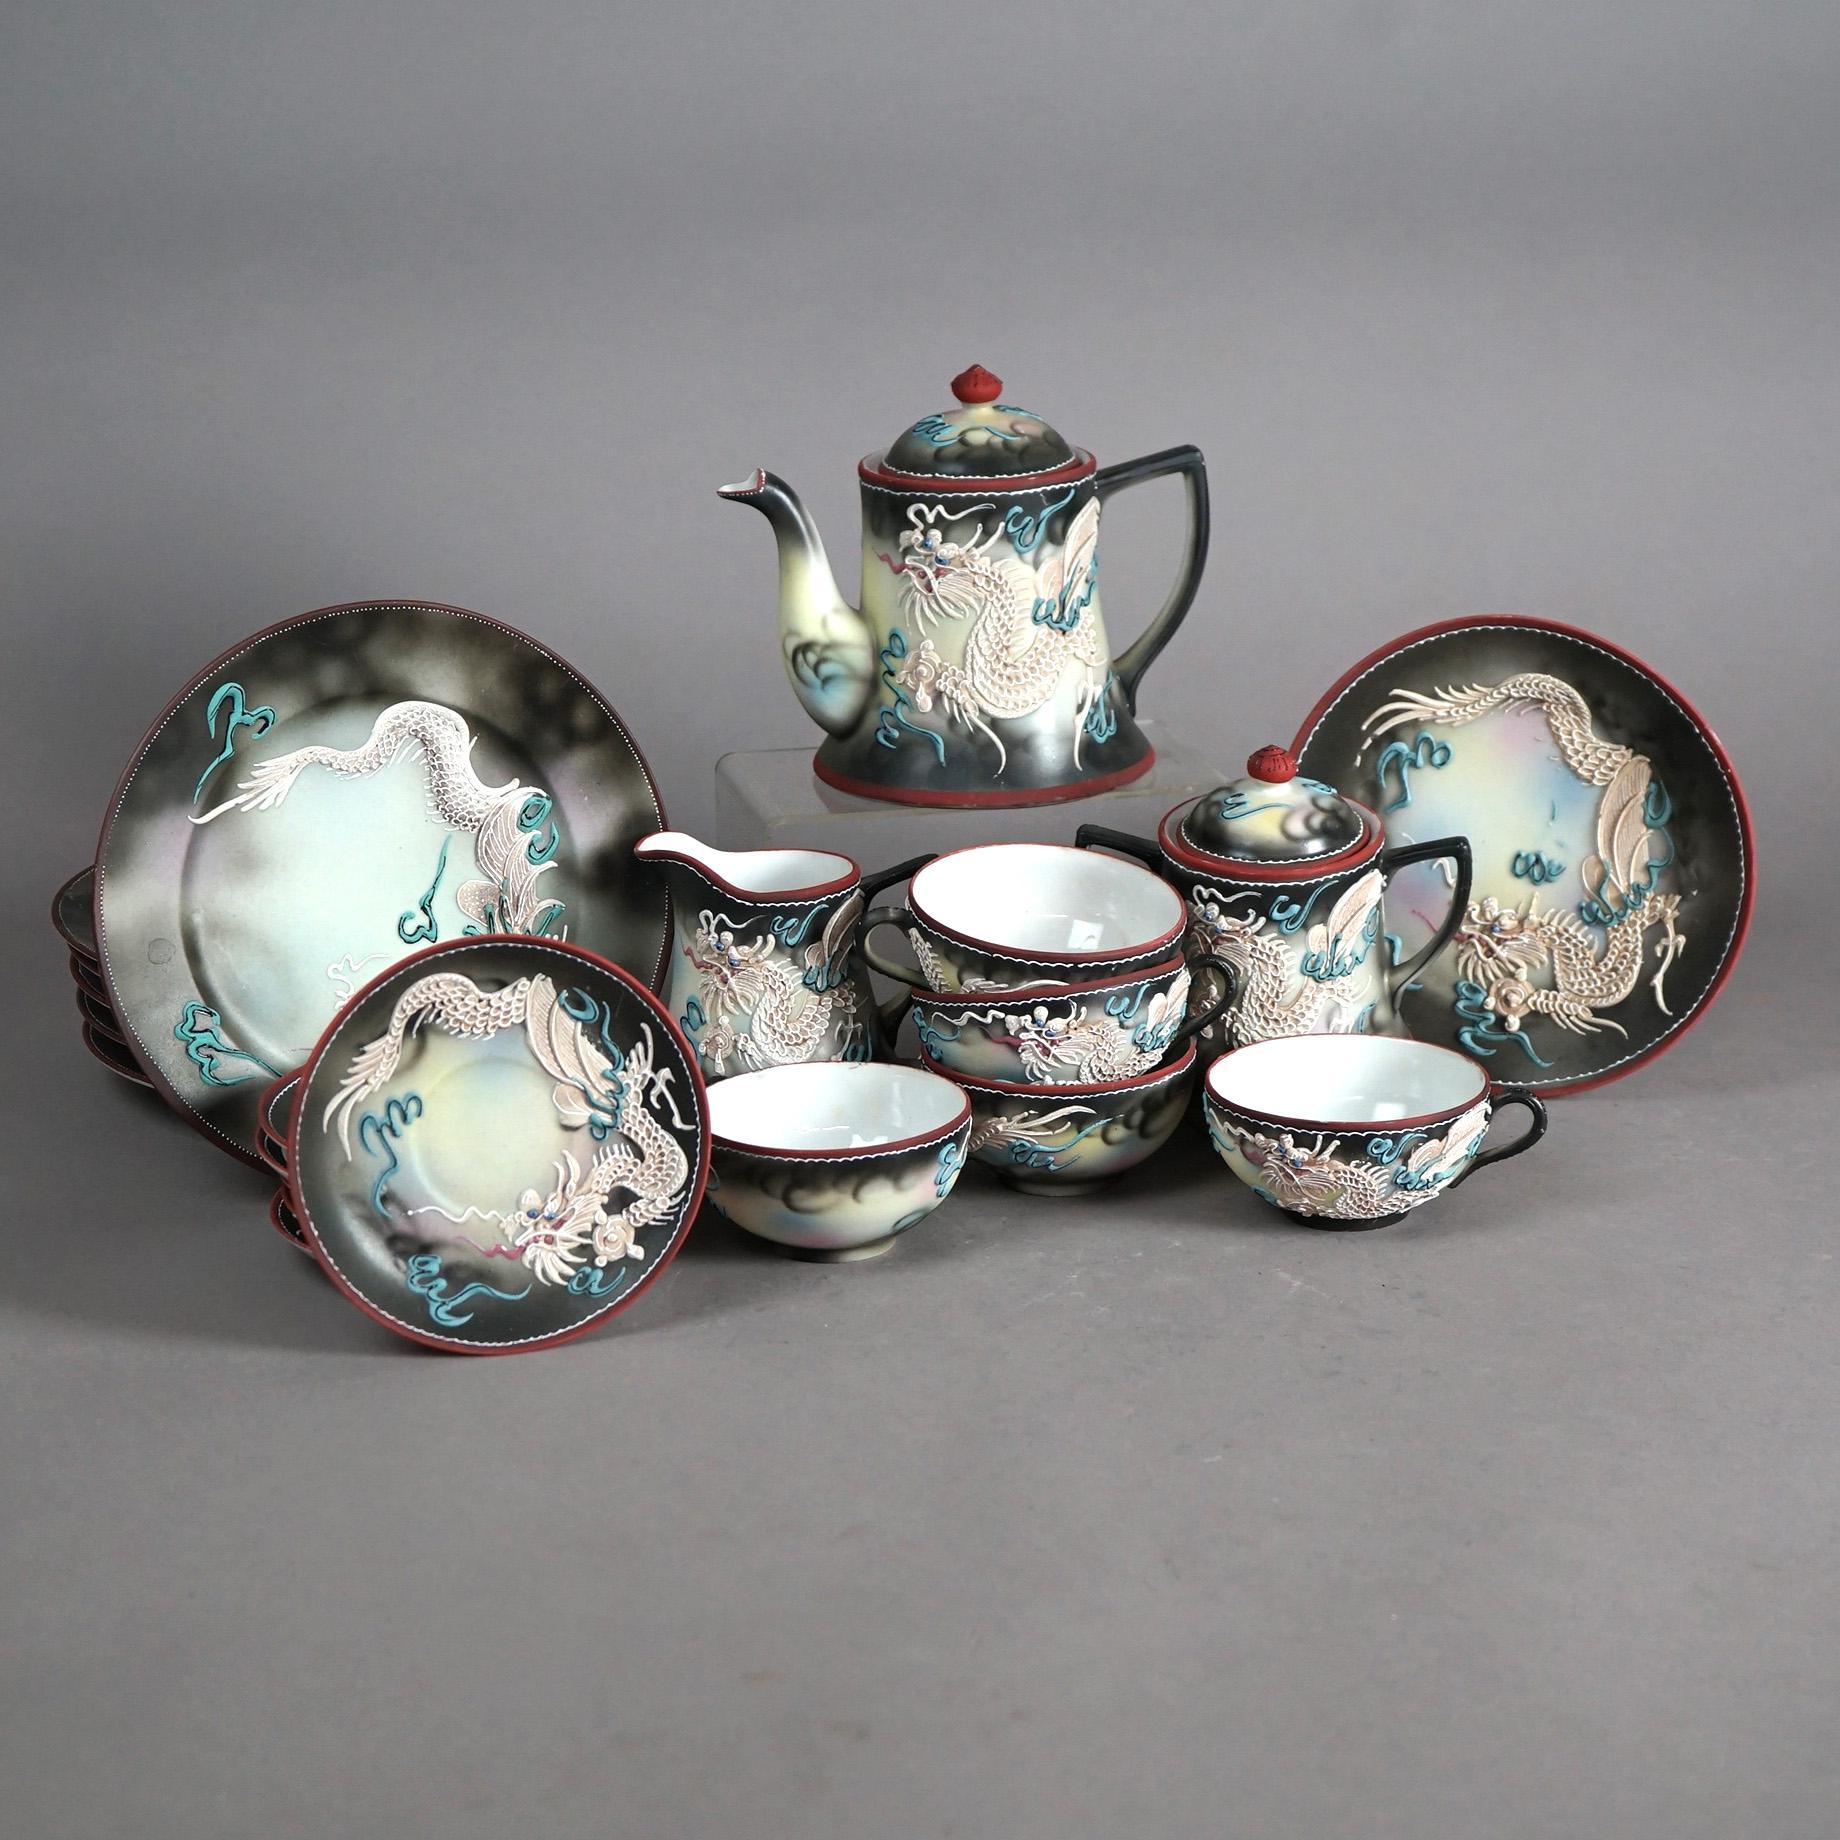 Antique 19-Piece Japanese Nippon Hand Painted Moriage Eggshell Porcelain Dragonware Tea Set c1920

Measures- Creamer cup: 4''H x 3.5''W x 4.5''D; Sugar Bowl: 5''H x 4''W x 5.5''D; Water Pot: 6''H x 7.5''W x 5.25''D; Six Dinner Plates: 1''H x 8.5''W